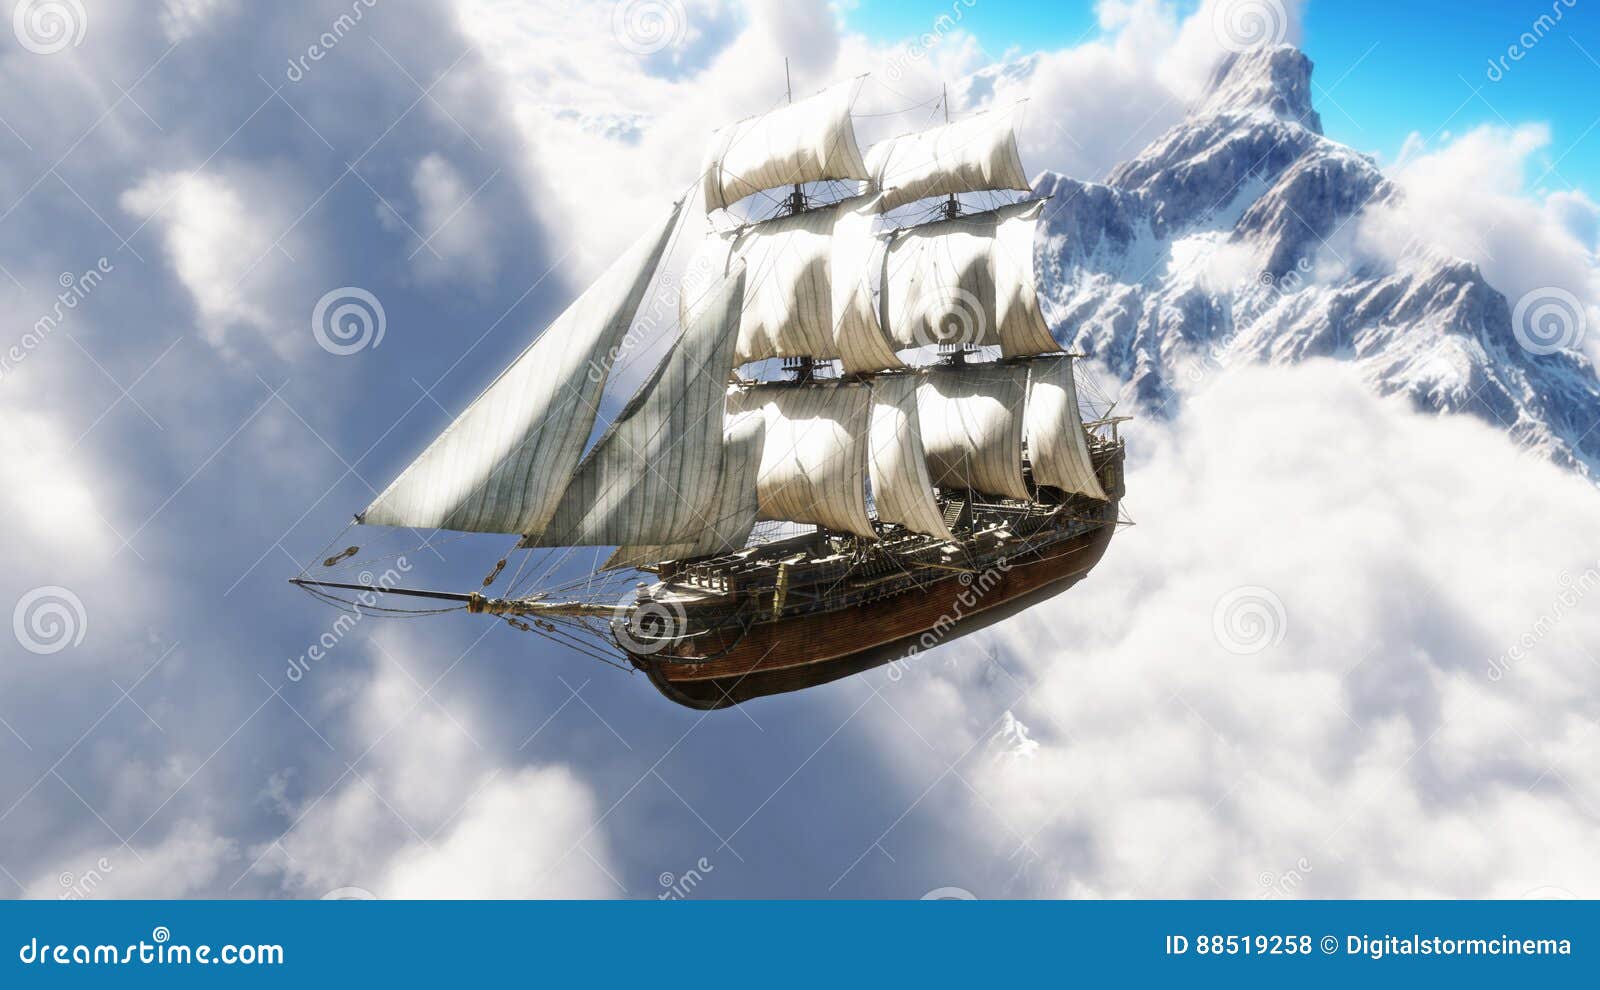 fantasy concept of a pirate ship sailing through the